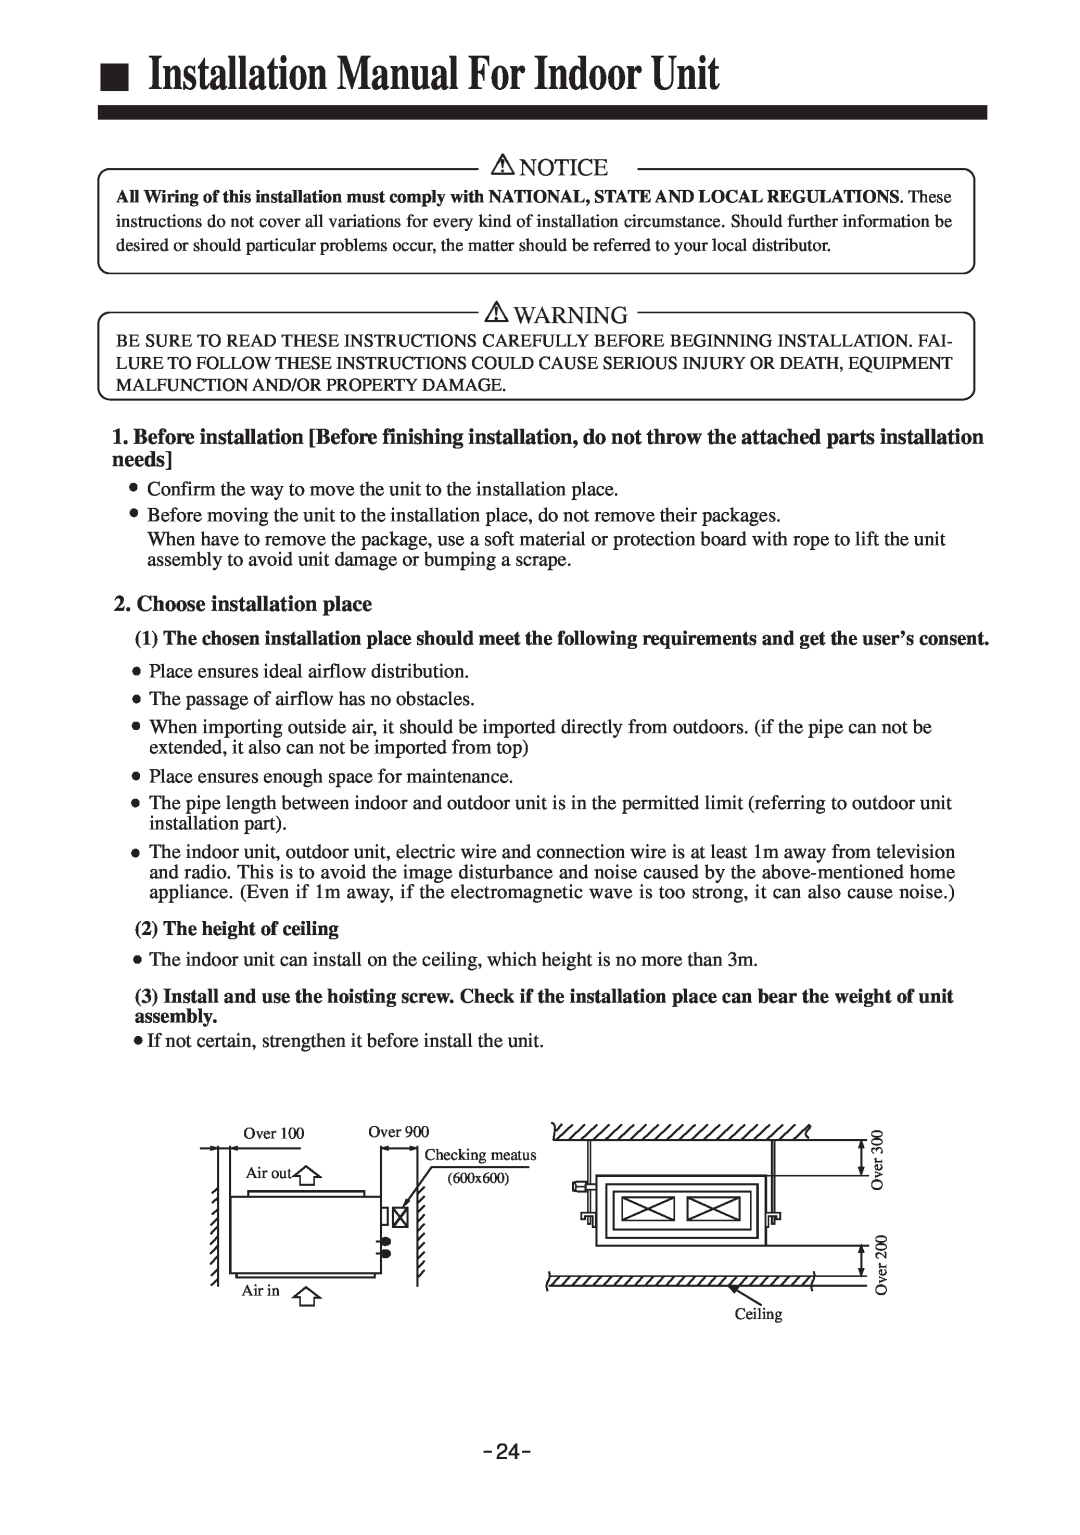 Haier HDU-42CF03/H installation manual Installation Manual For Indoor Unit, Choose installation place 